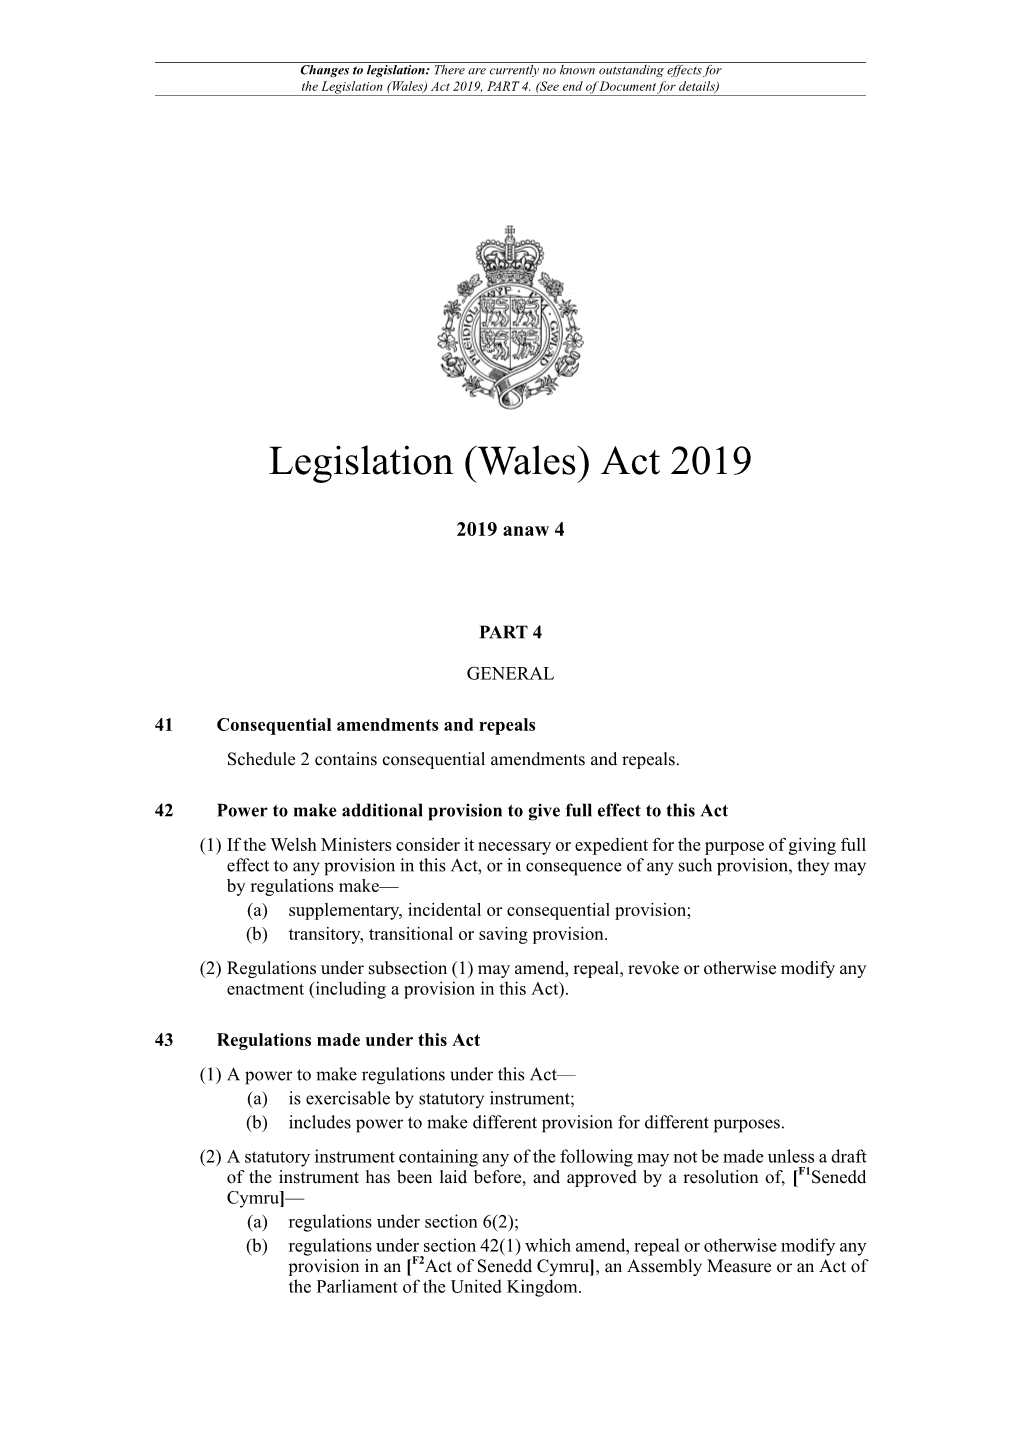 Legislation (Wales) Act 2019, PART 4